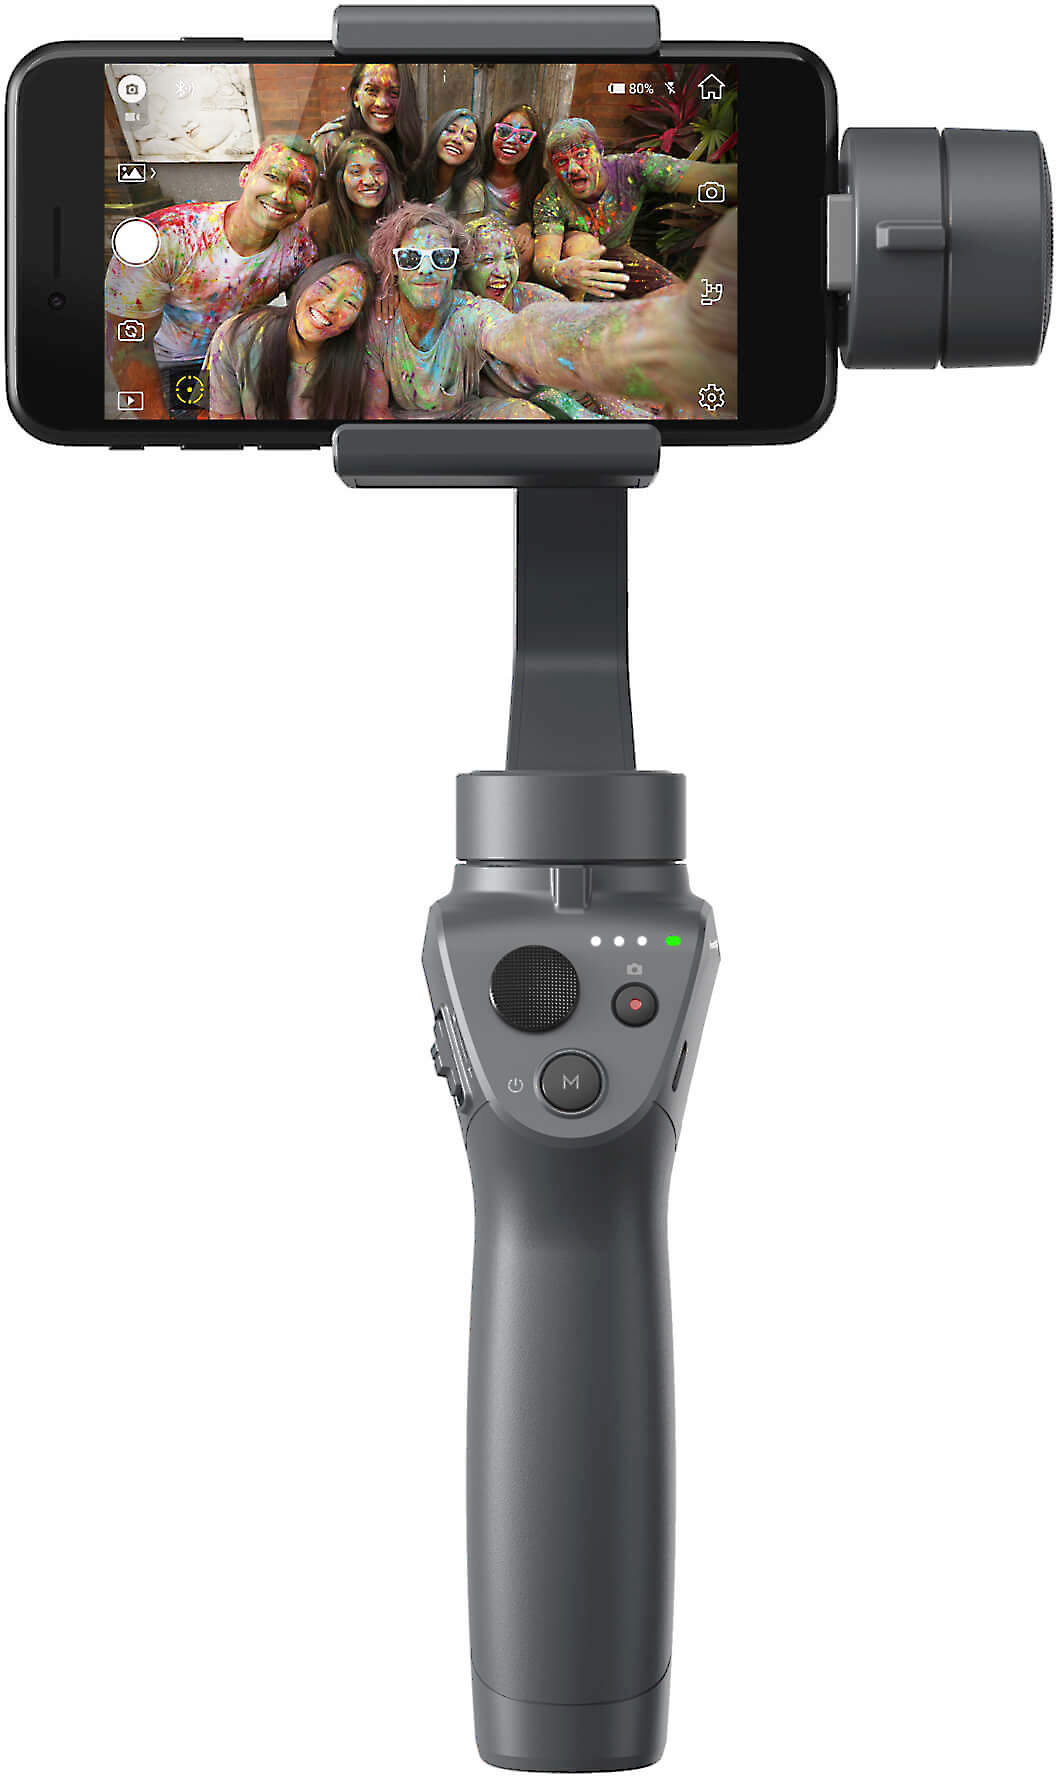 DJI Mobile 2 Handheld gimbal mount for smartphone photography at Crutchfield